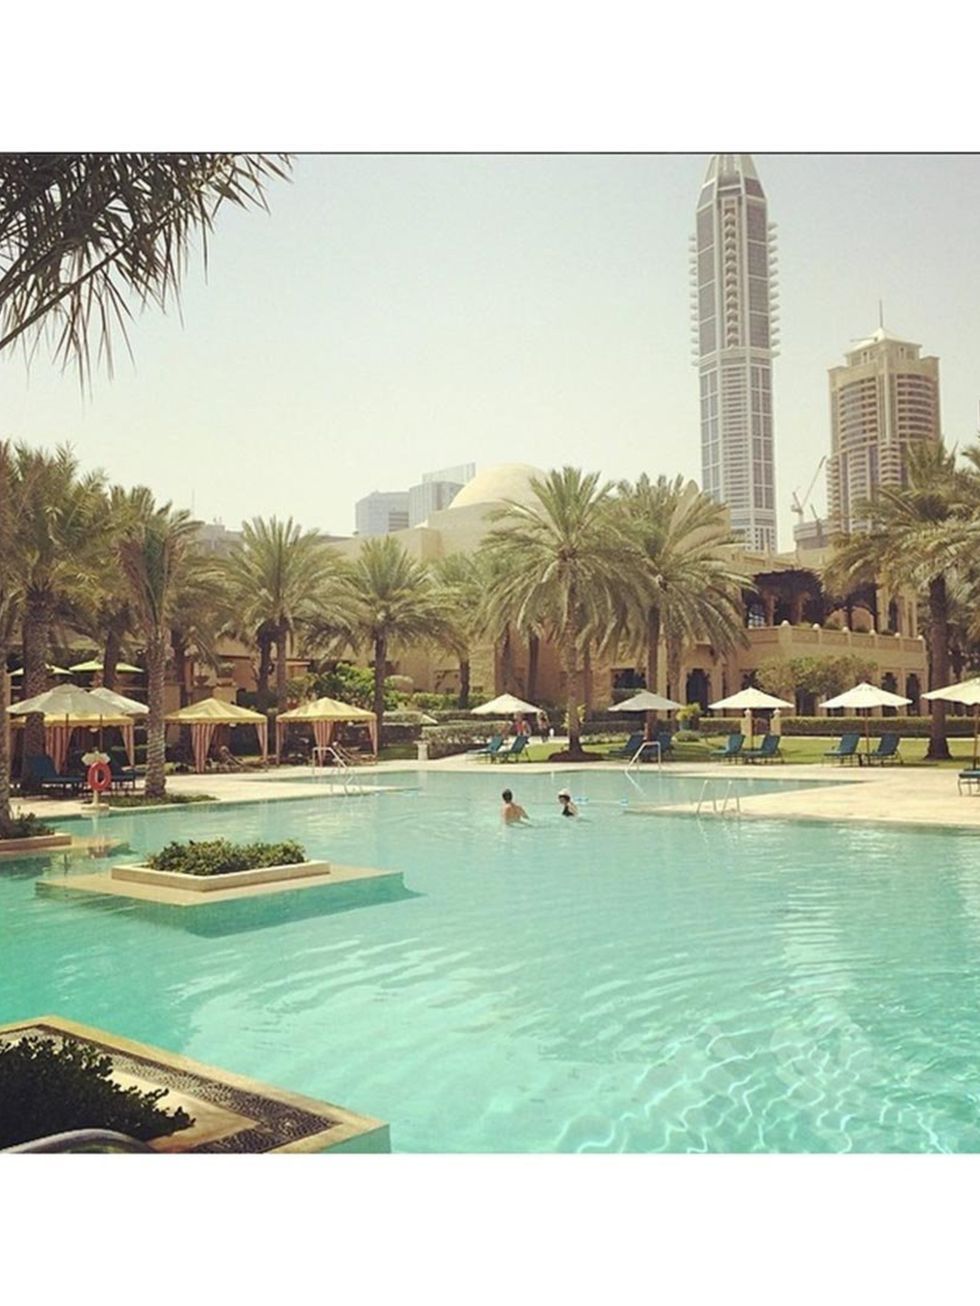 <p>Brogan Loftus:'Pool with a view #Dubai #havesomeofthat #heaven'</p>